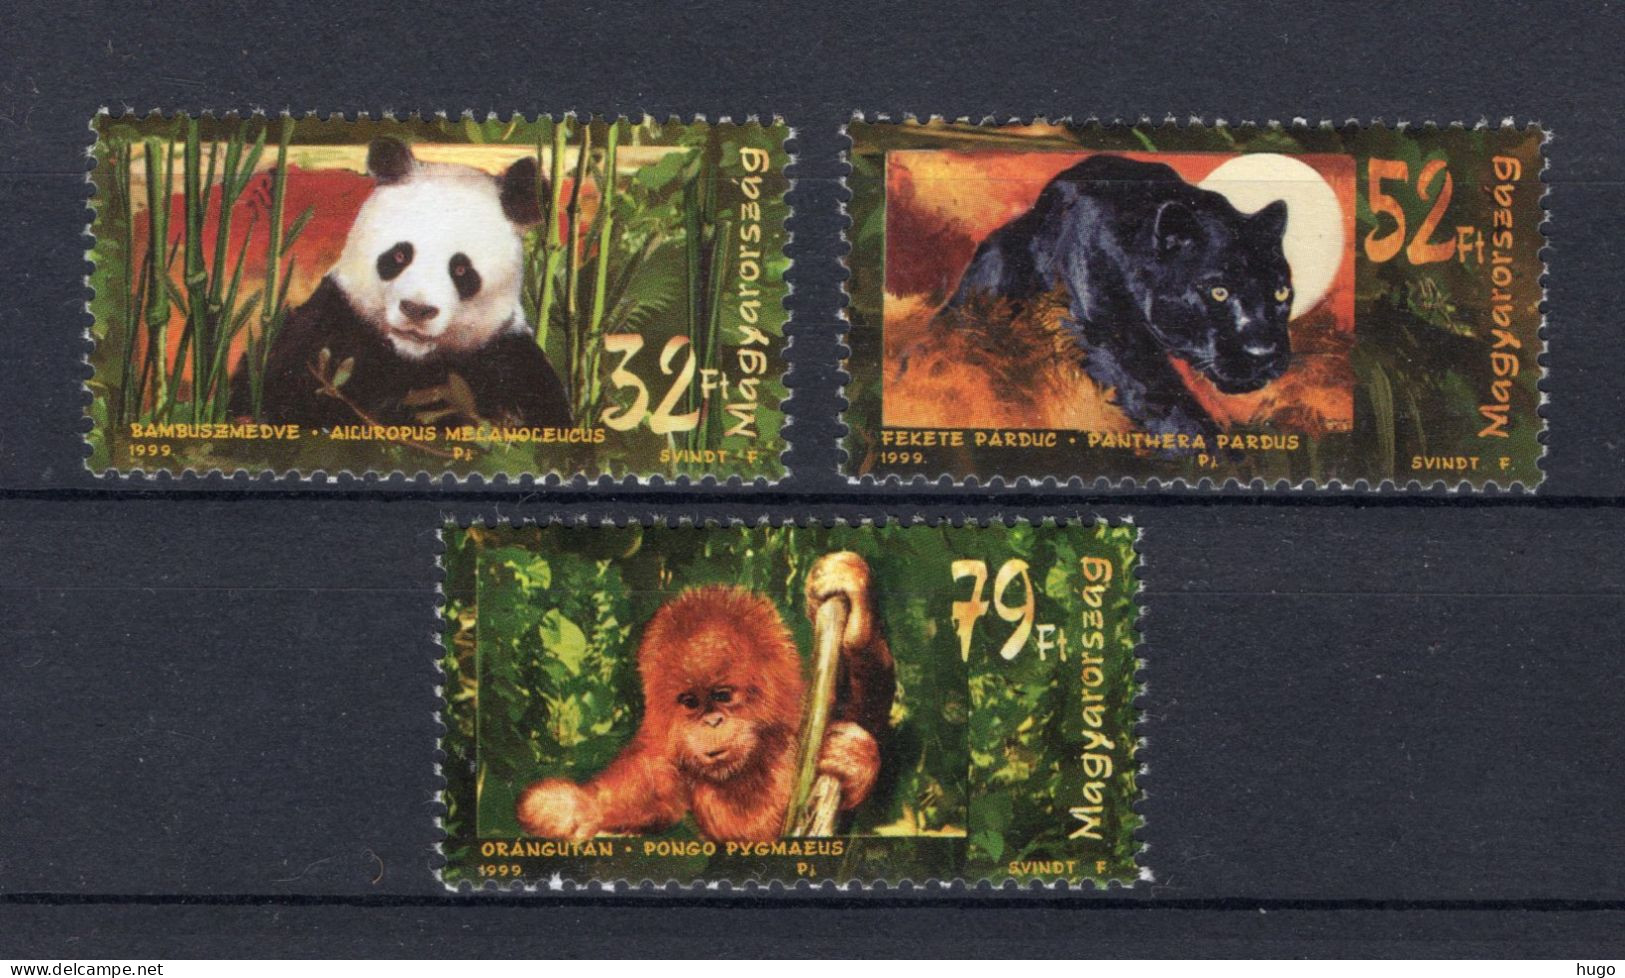 HONGARIJE Yt. 3674/3676 MNH 1999 - Unused Stamps